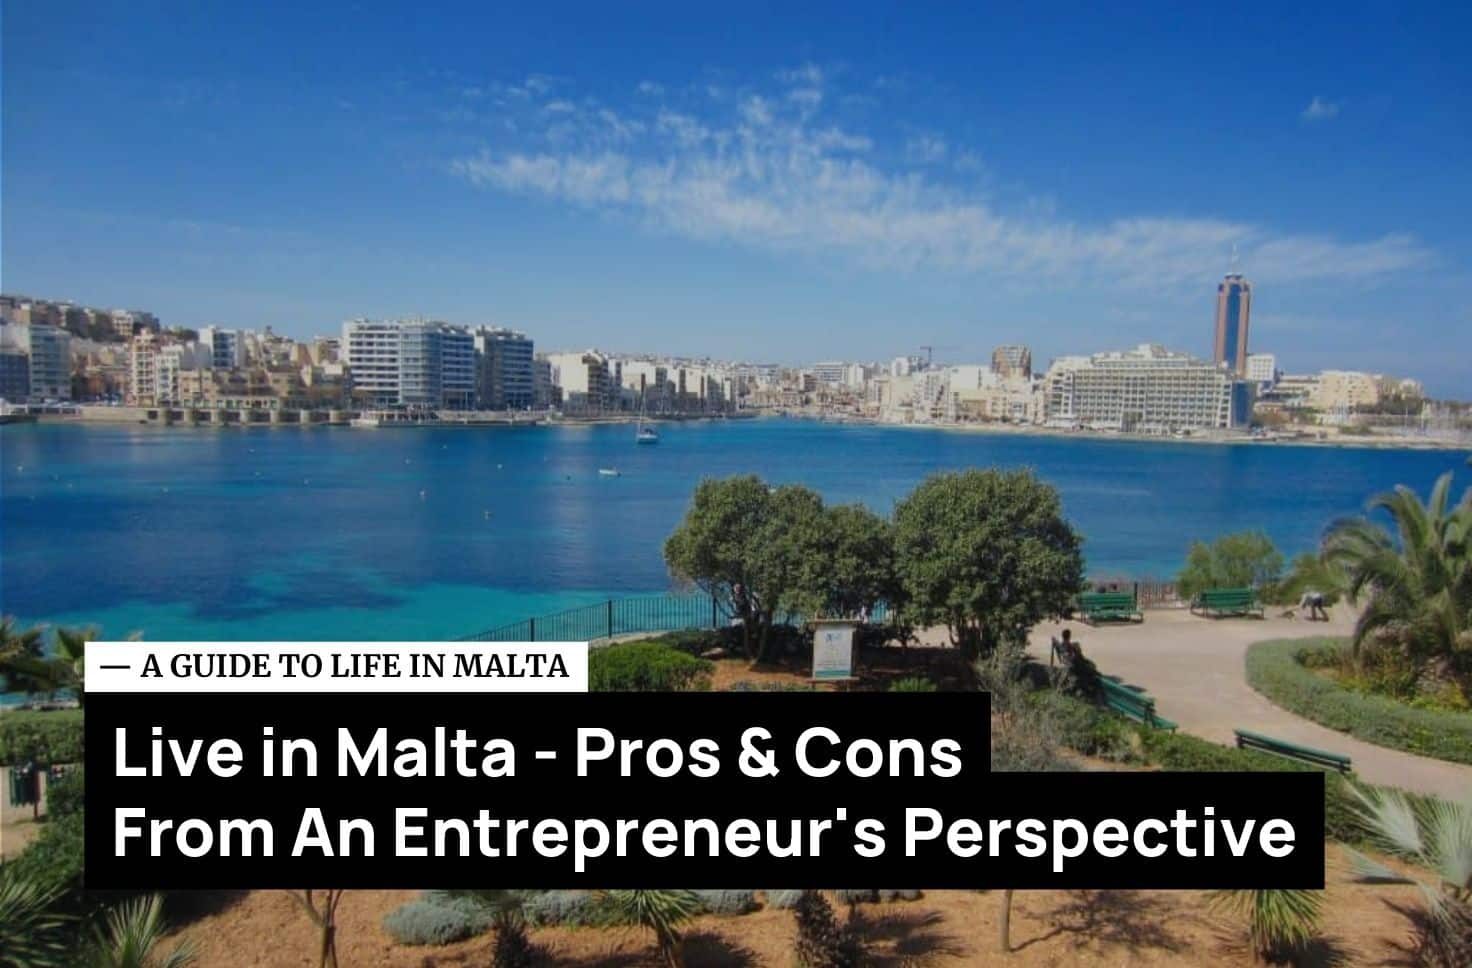 The Green Corner - Plaza Malta